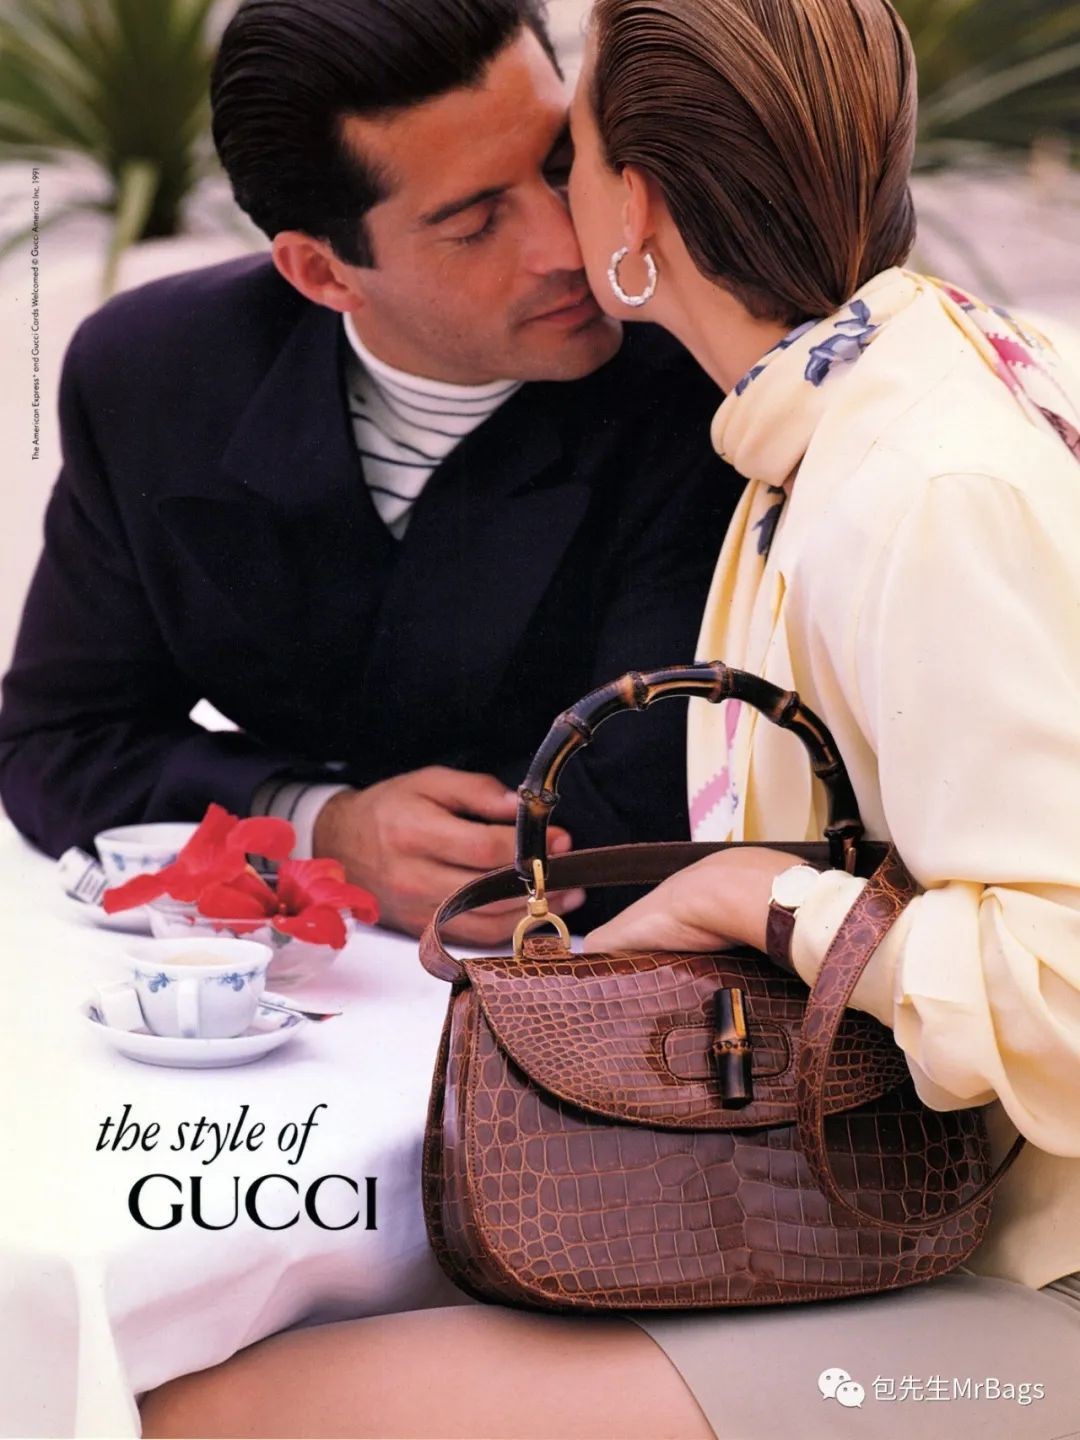 Gucci کا سب سے مشہور ریپلیکا ڈیزائنر بیگ - Gucci Bamboo 1947 (2022 نیا ایڈیشن)-بہترین کوالٹی کا جعلی لوئس ووٹن بیگ آن لائن اسٹور، ریپلیکا ڈیزائنر بیگ آر یو